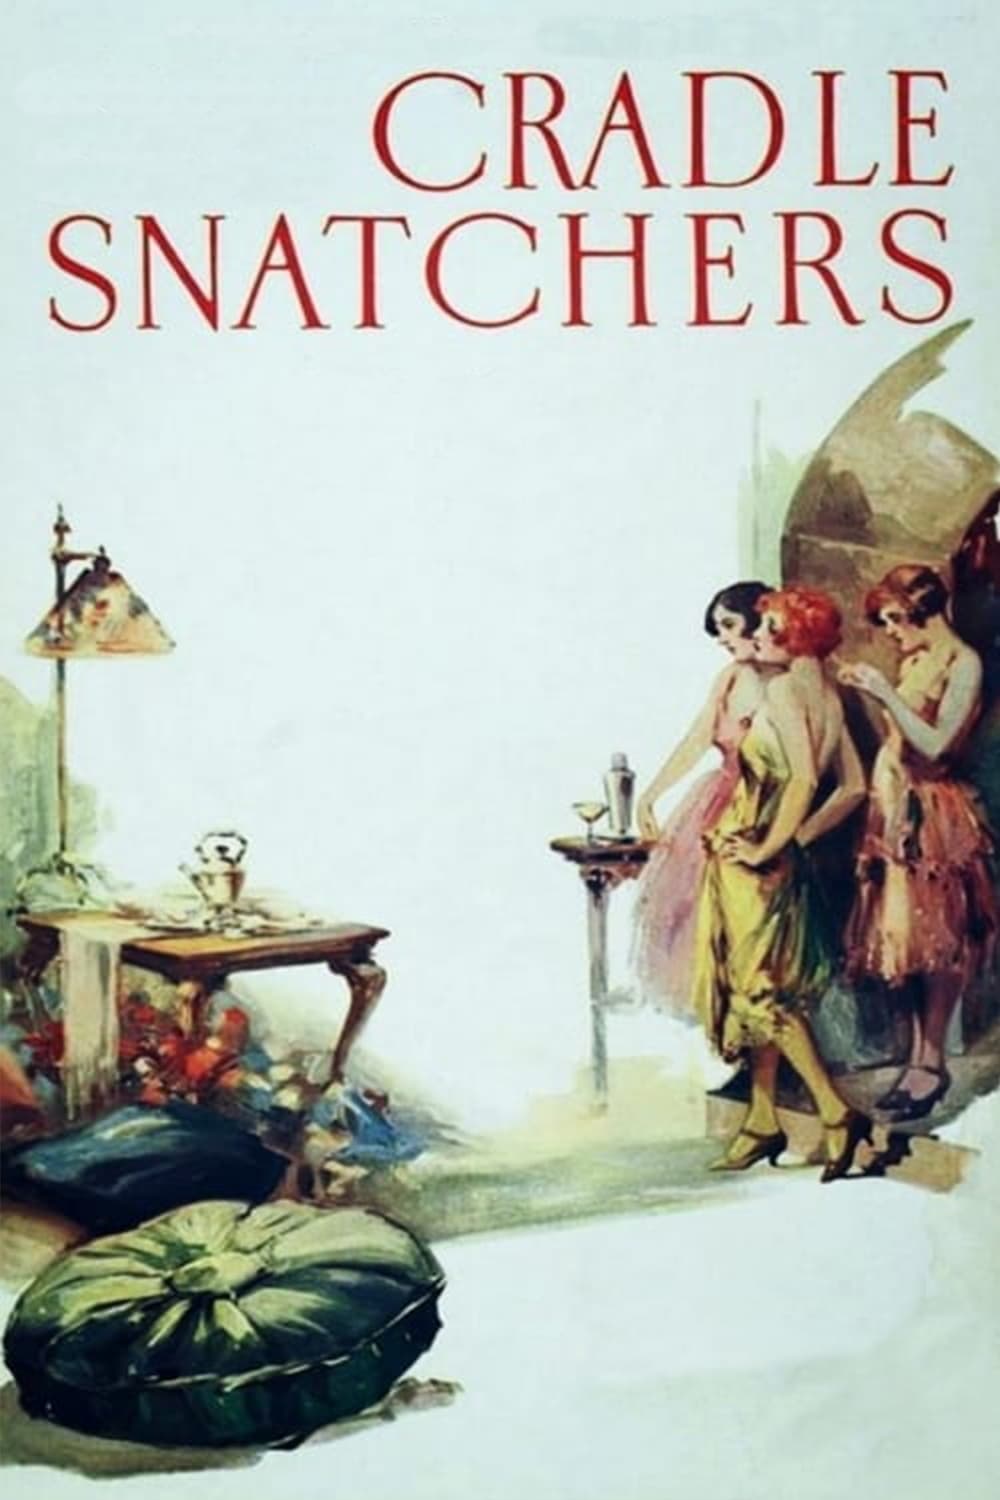 Cradle Snatchers